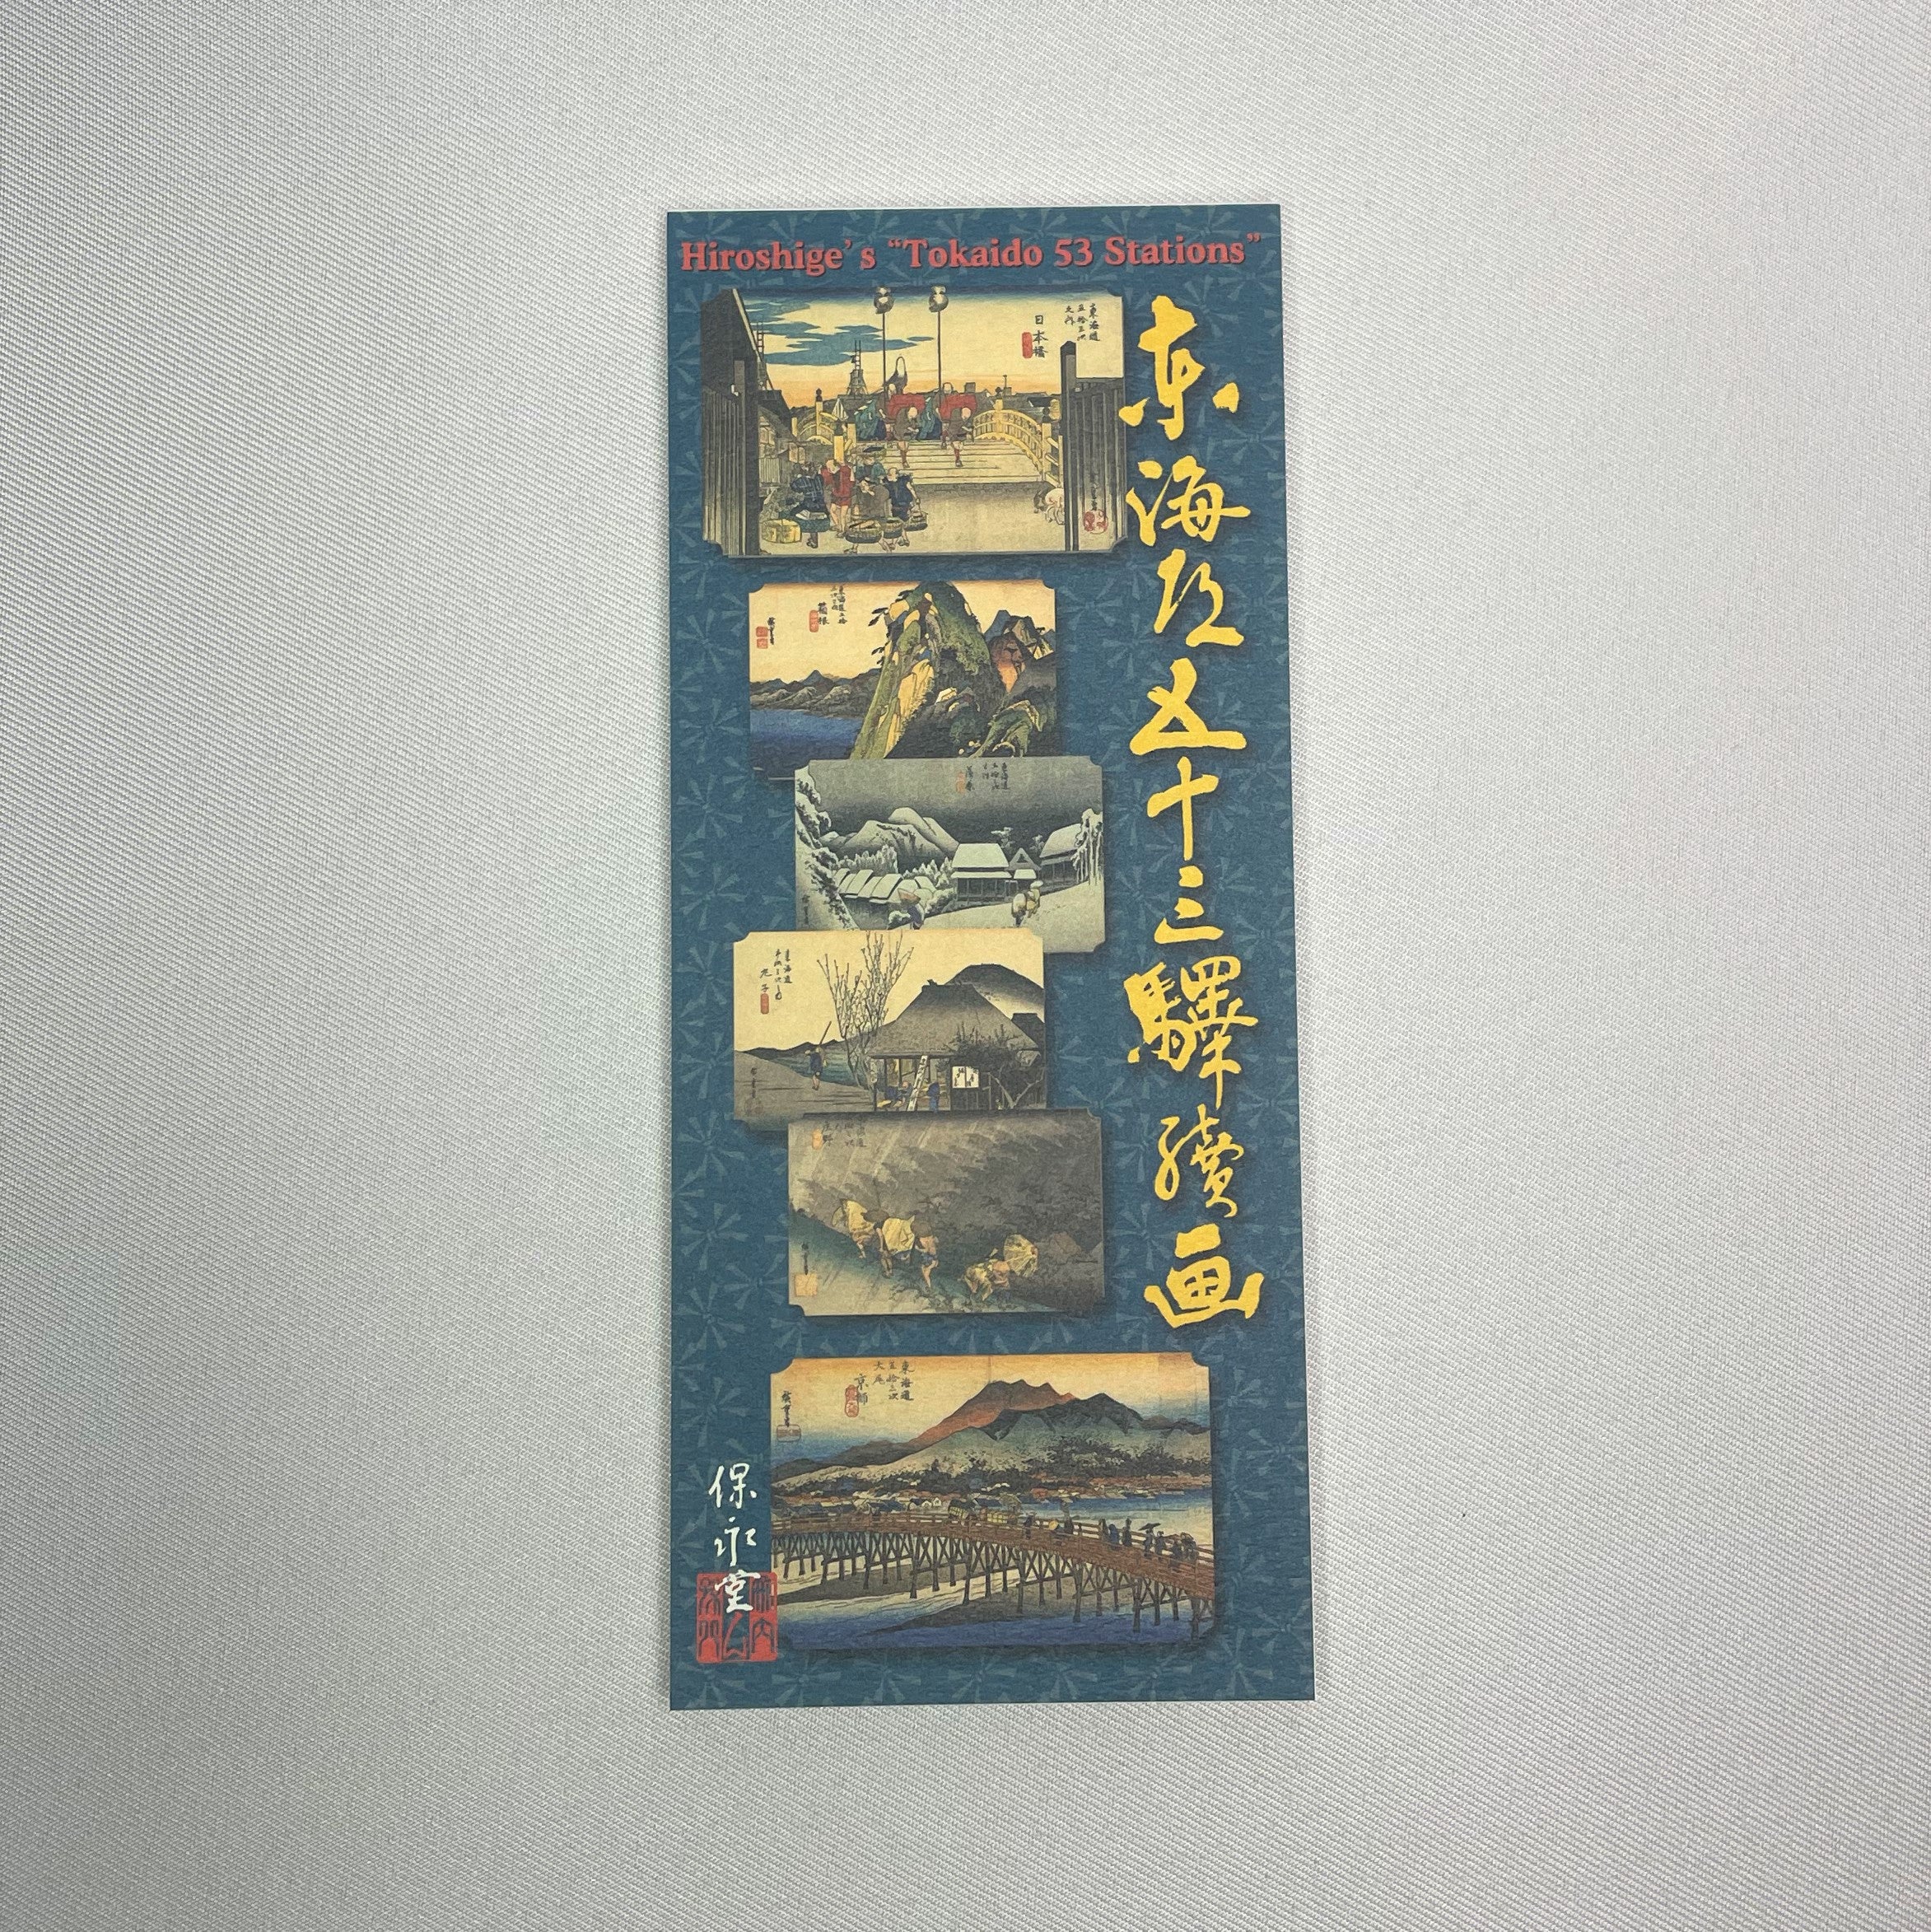 Notepad (Hokusai & Hiroshige)